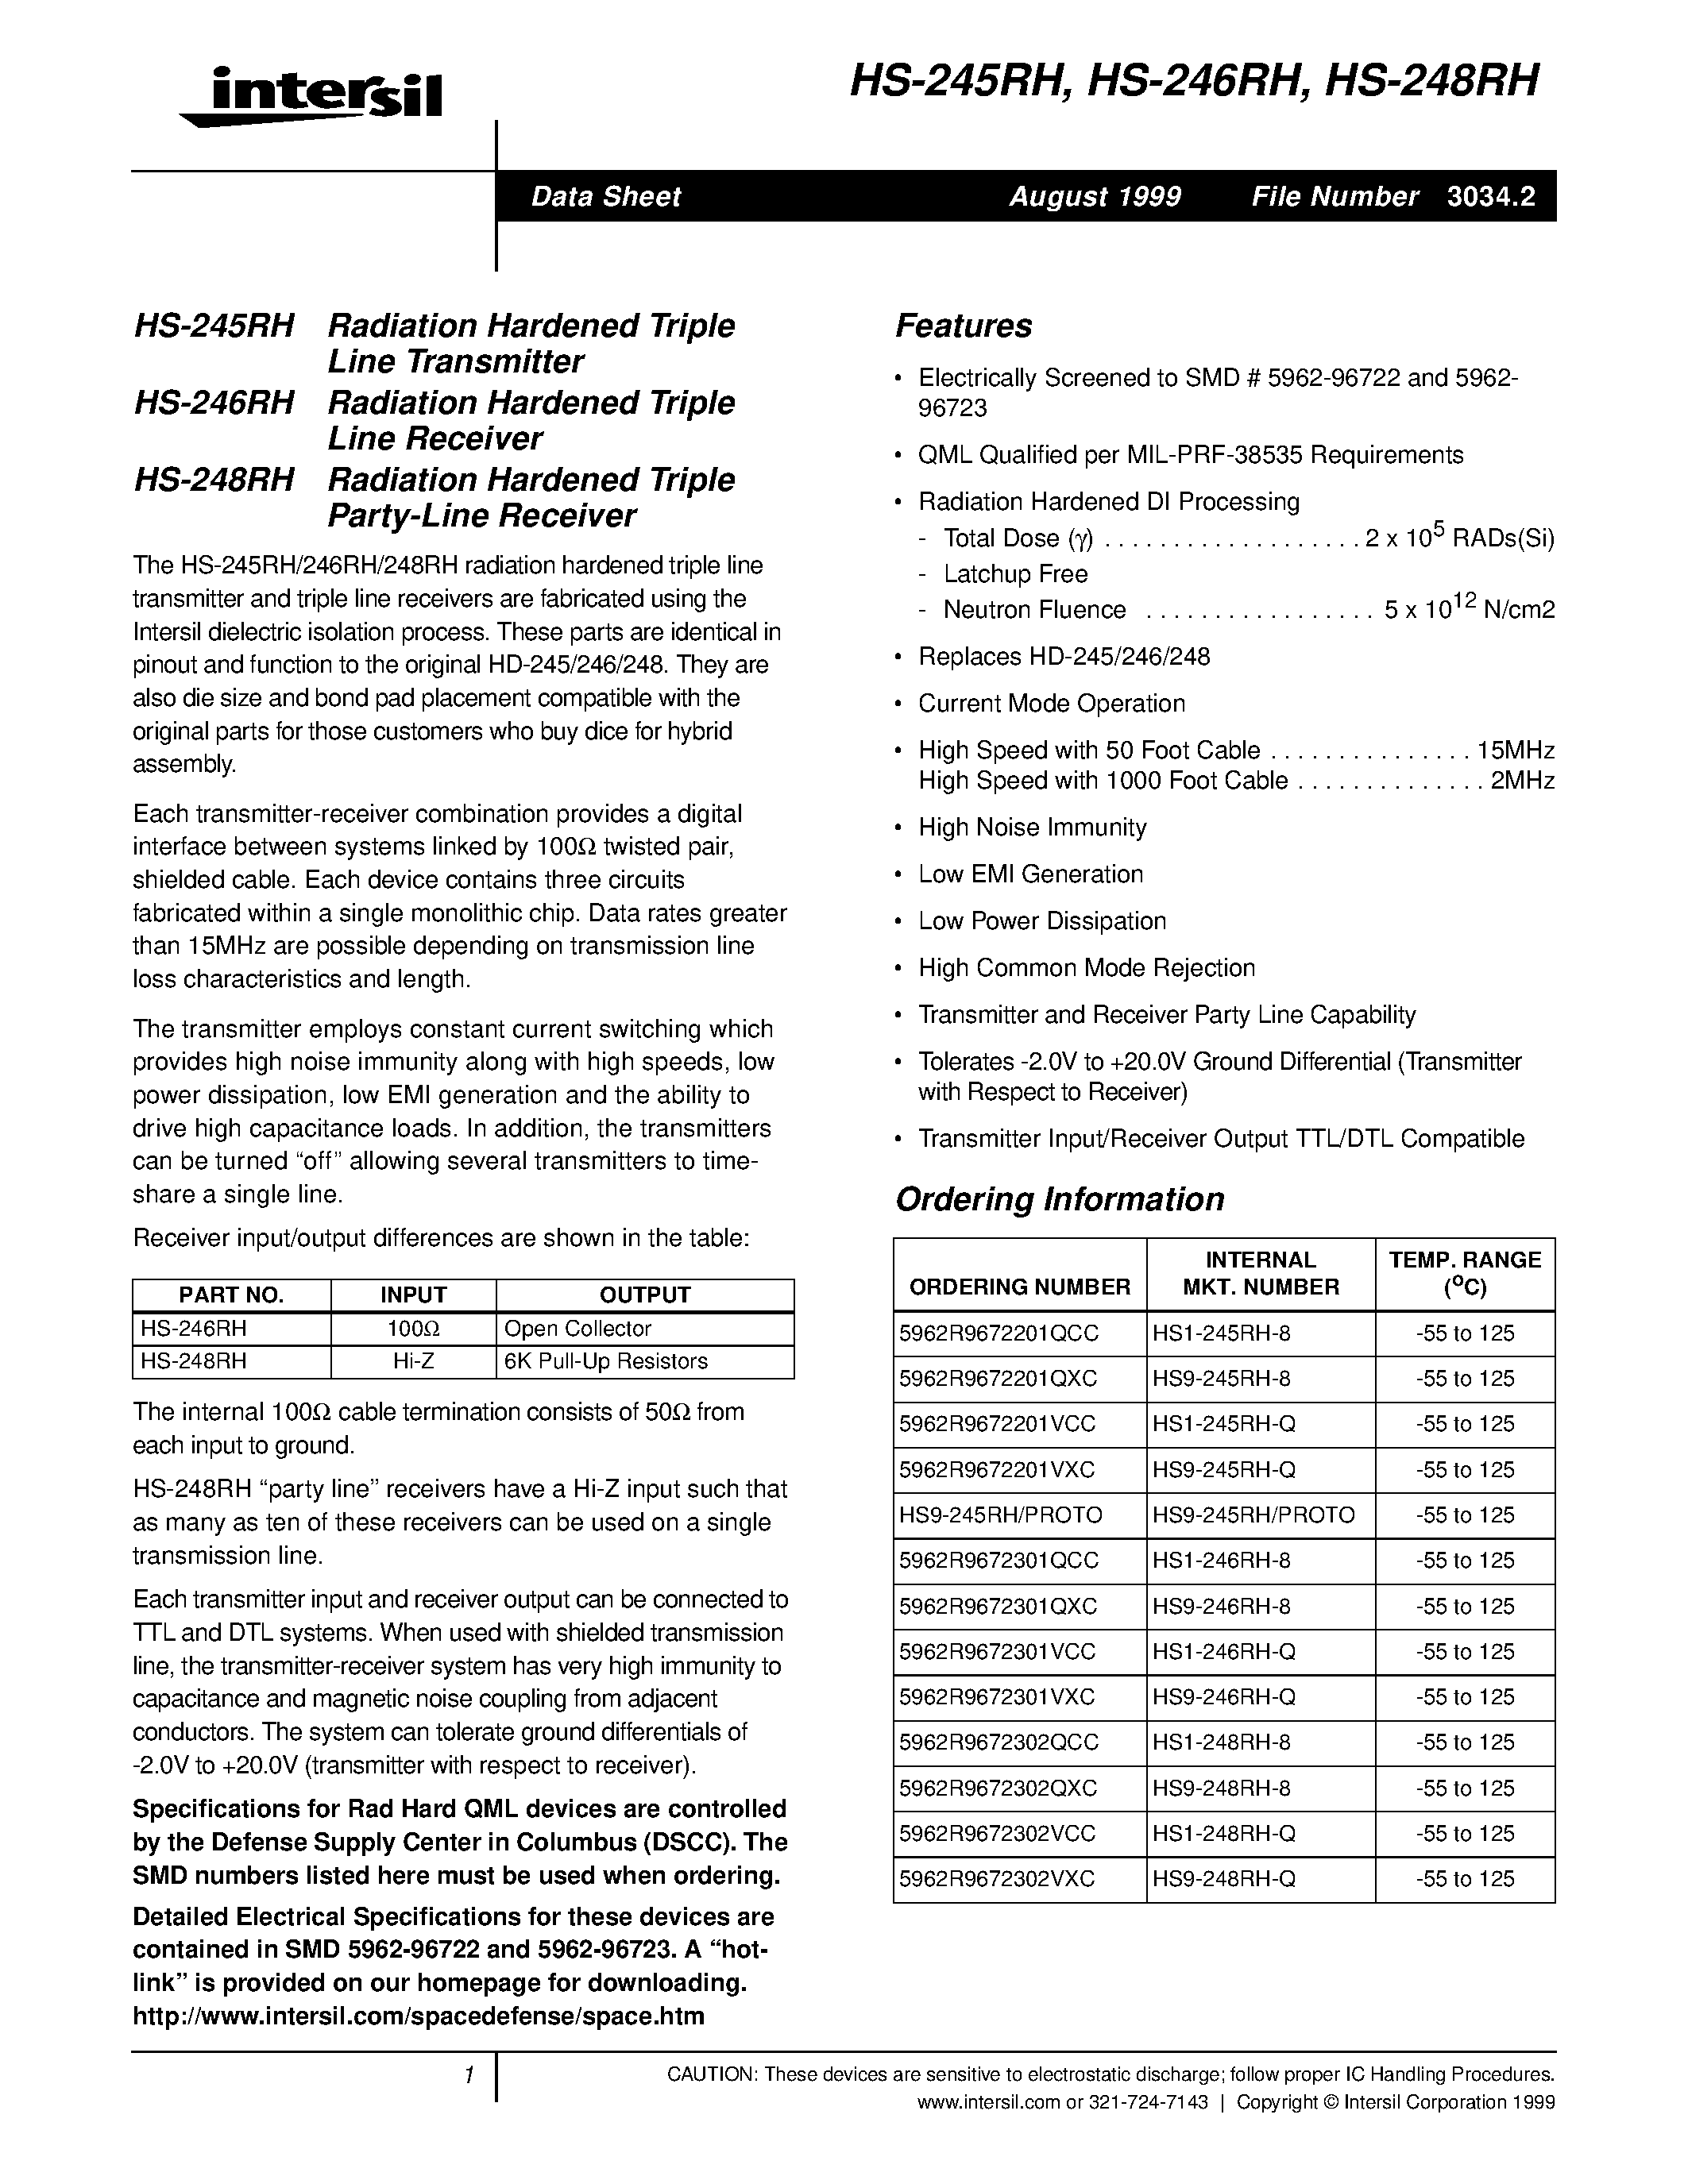 Даташит HS9-245RH-Q - Radiation Hardened Triple Line(party-Line) Transmitter страница 1